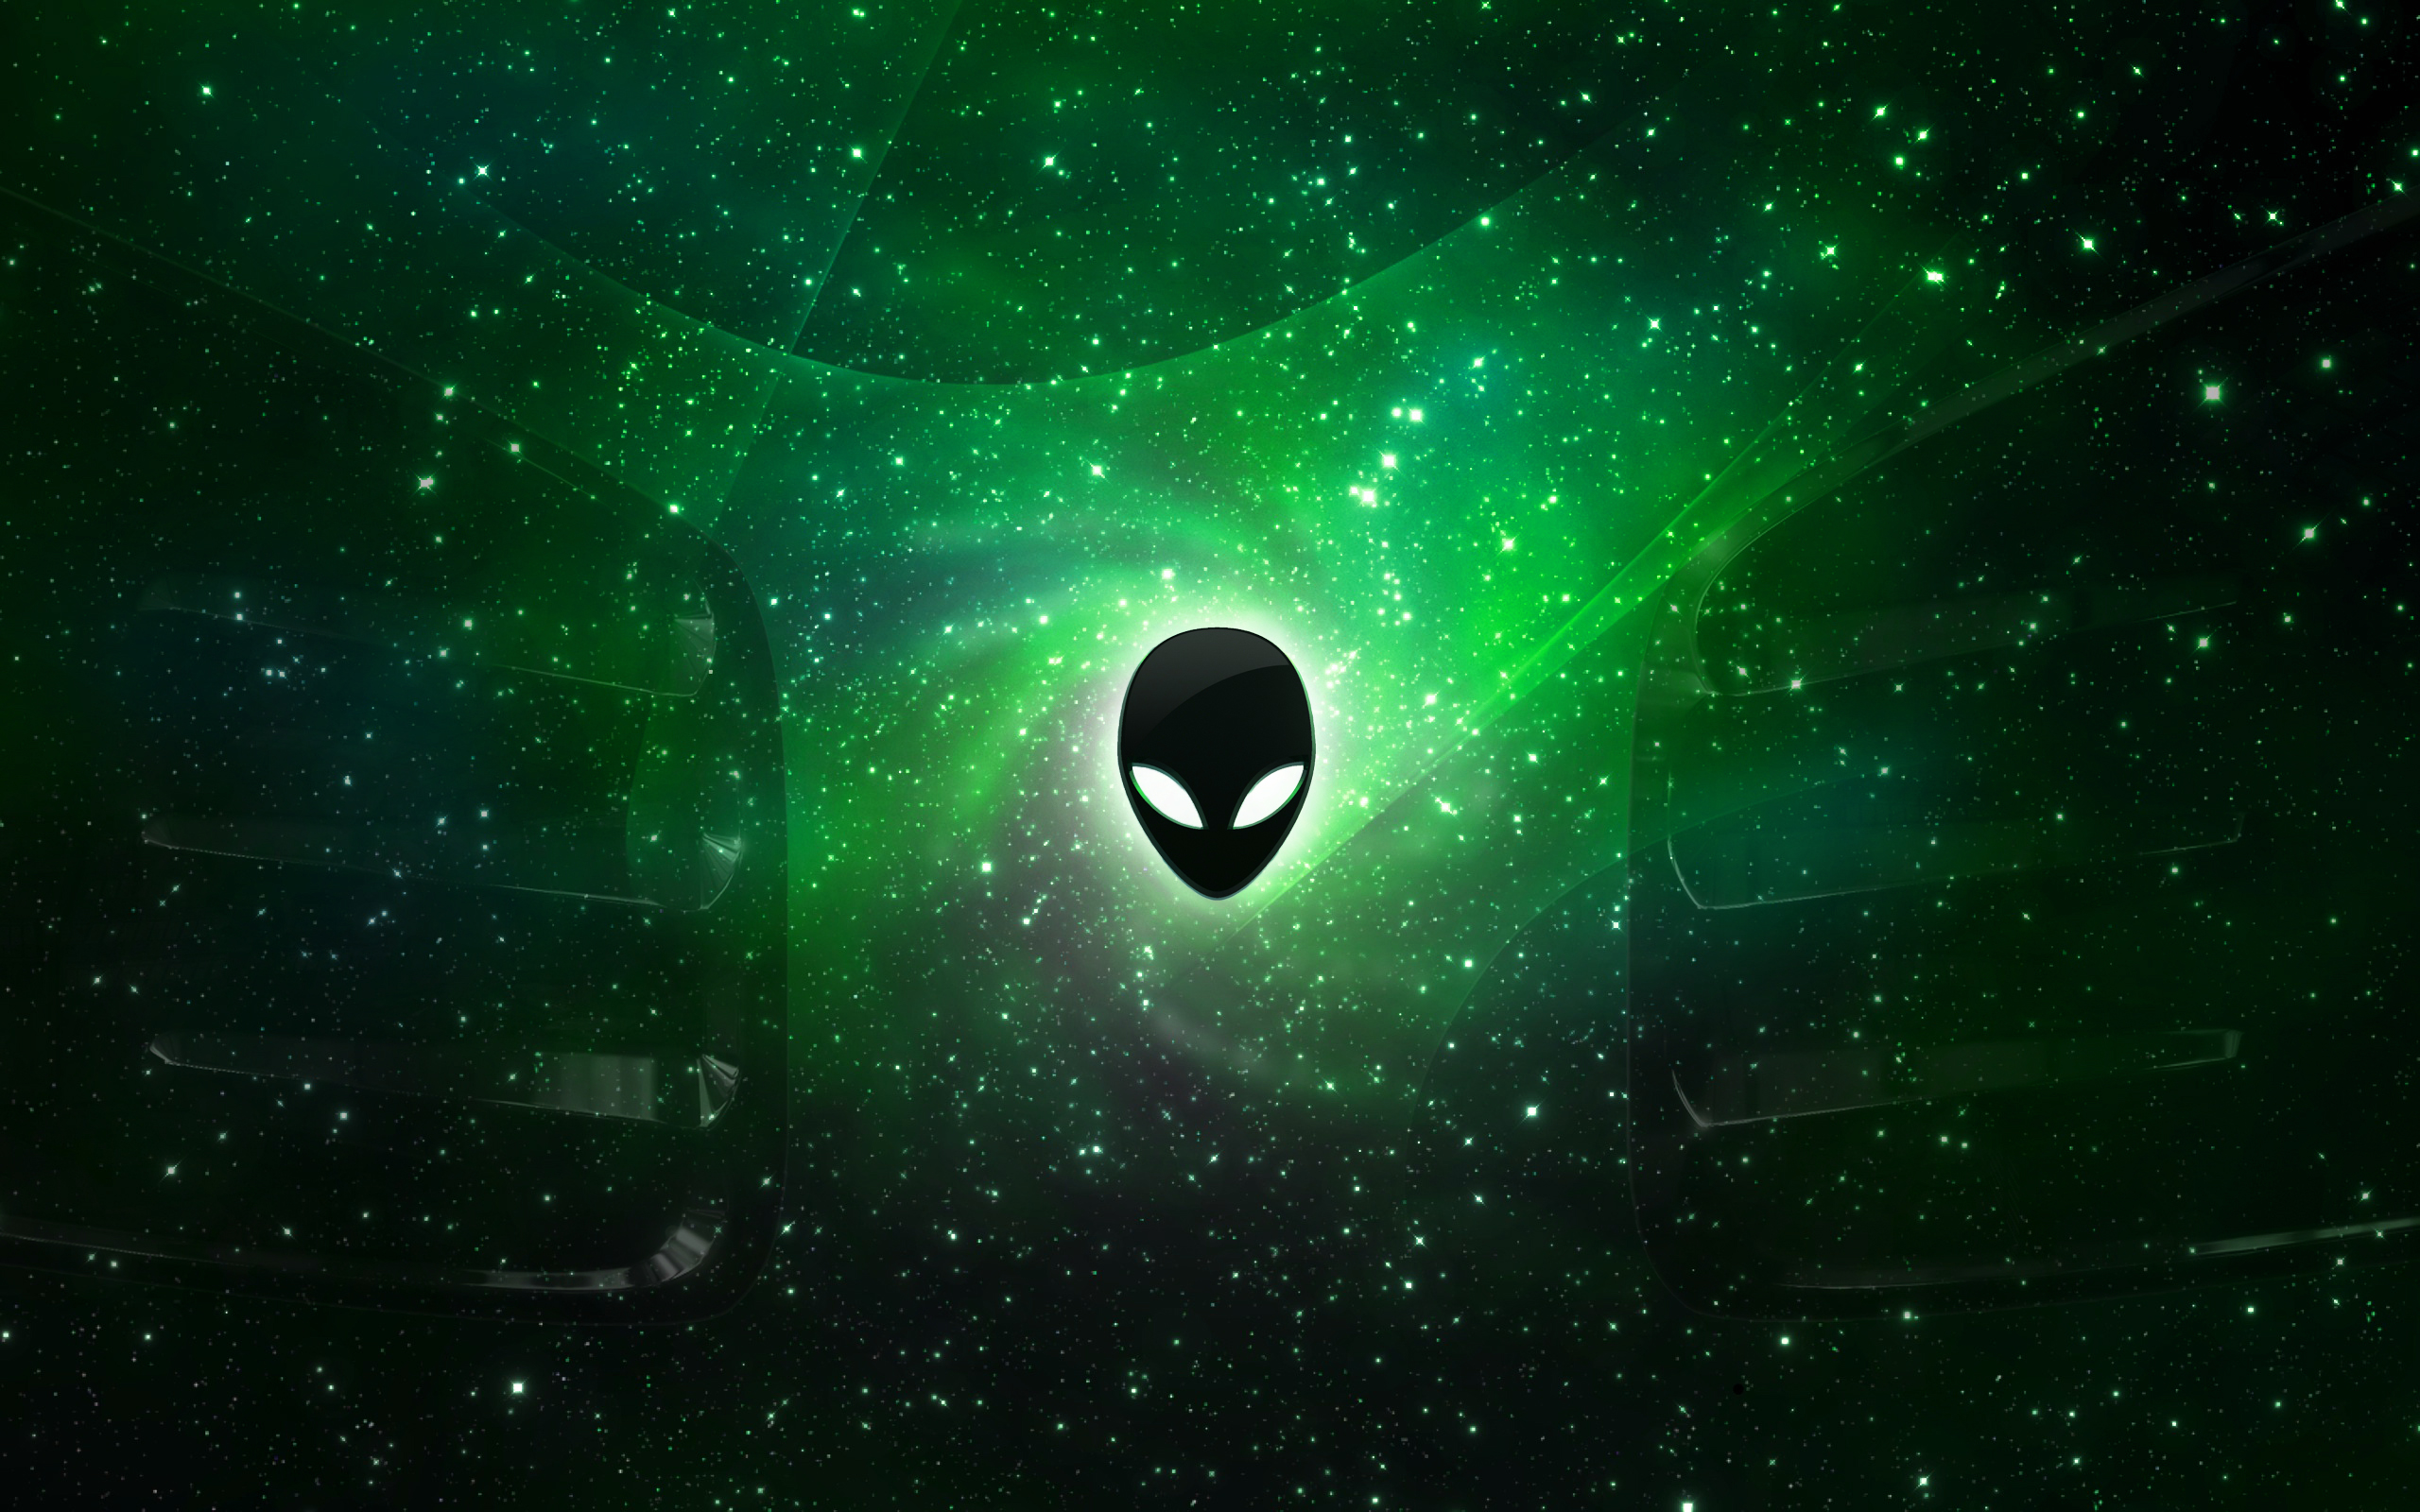 alienware wallpaper hd green